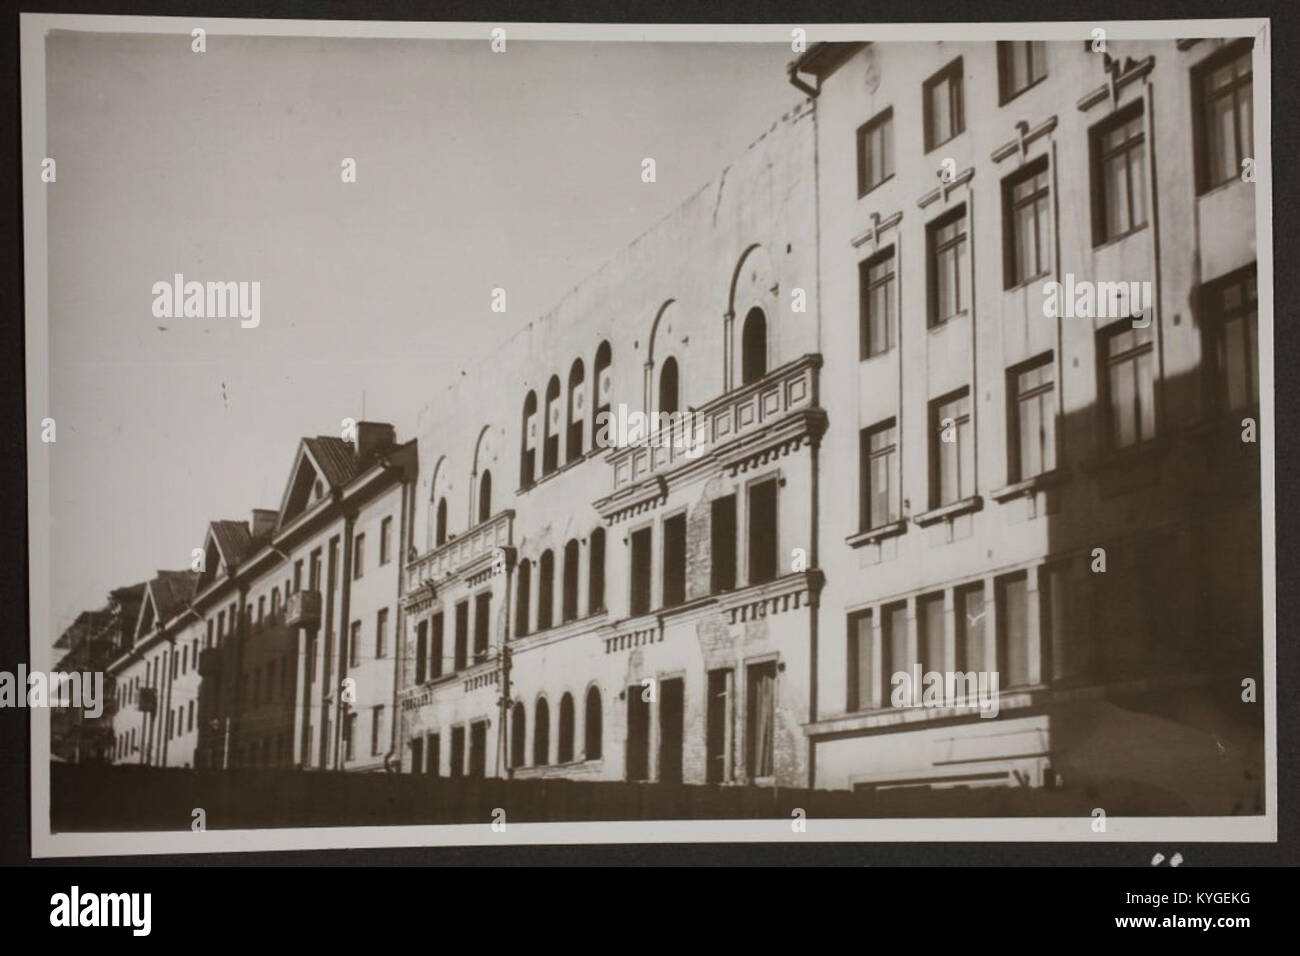 Riigiarhiivi Maneeži tänava hoone-Gebäude der Staatlichen Archive in Maneeži St. Tallinn, Estland 1943-1945 (10739590954) Stockfoto